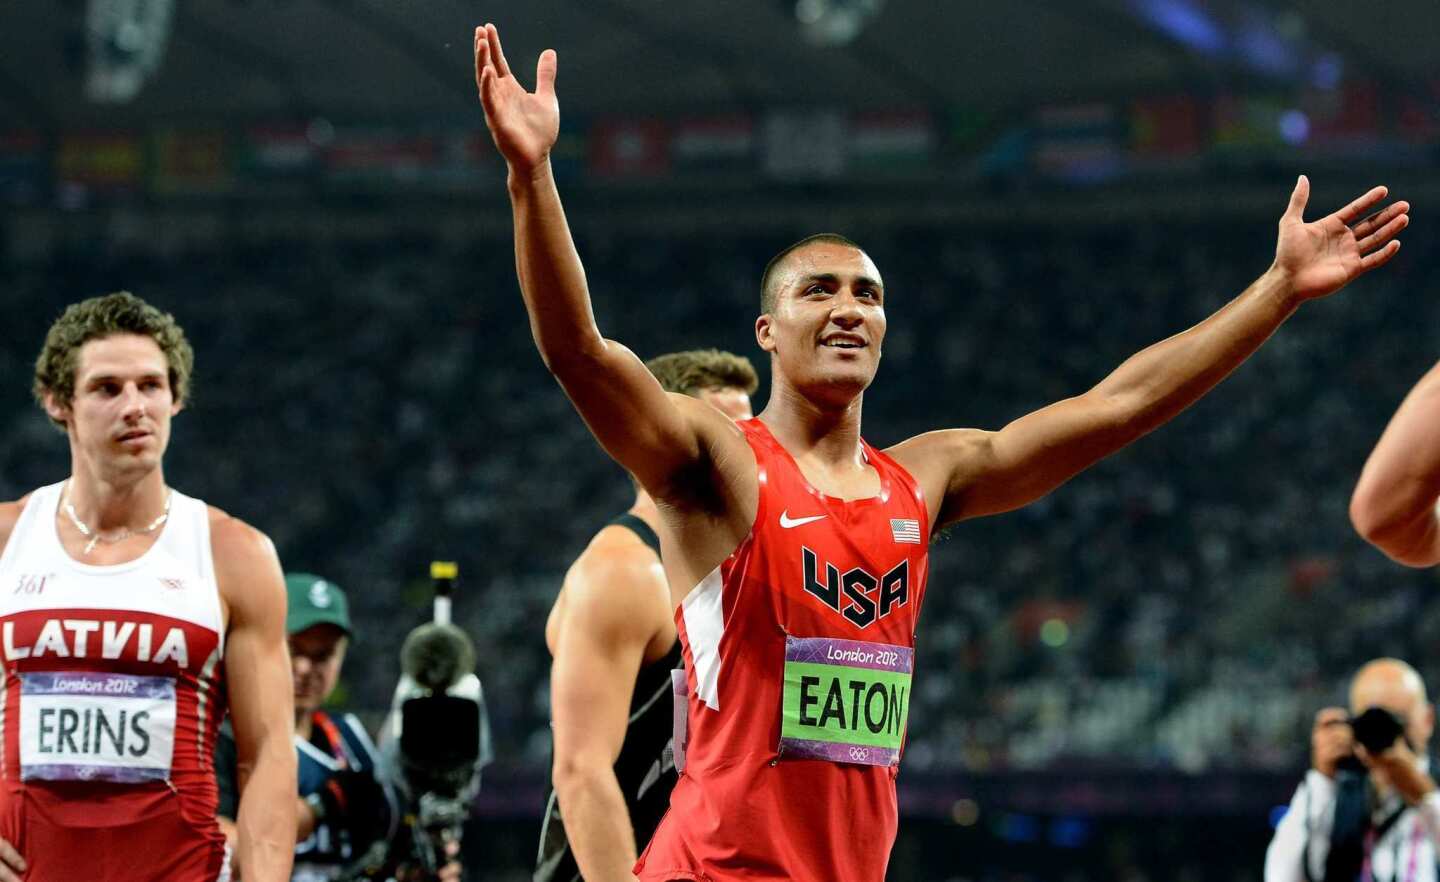 Ashton Eaton of the United States celebrates winning the gold medal in the men's decathlon Thursday.